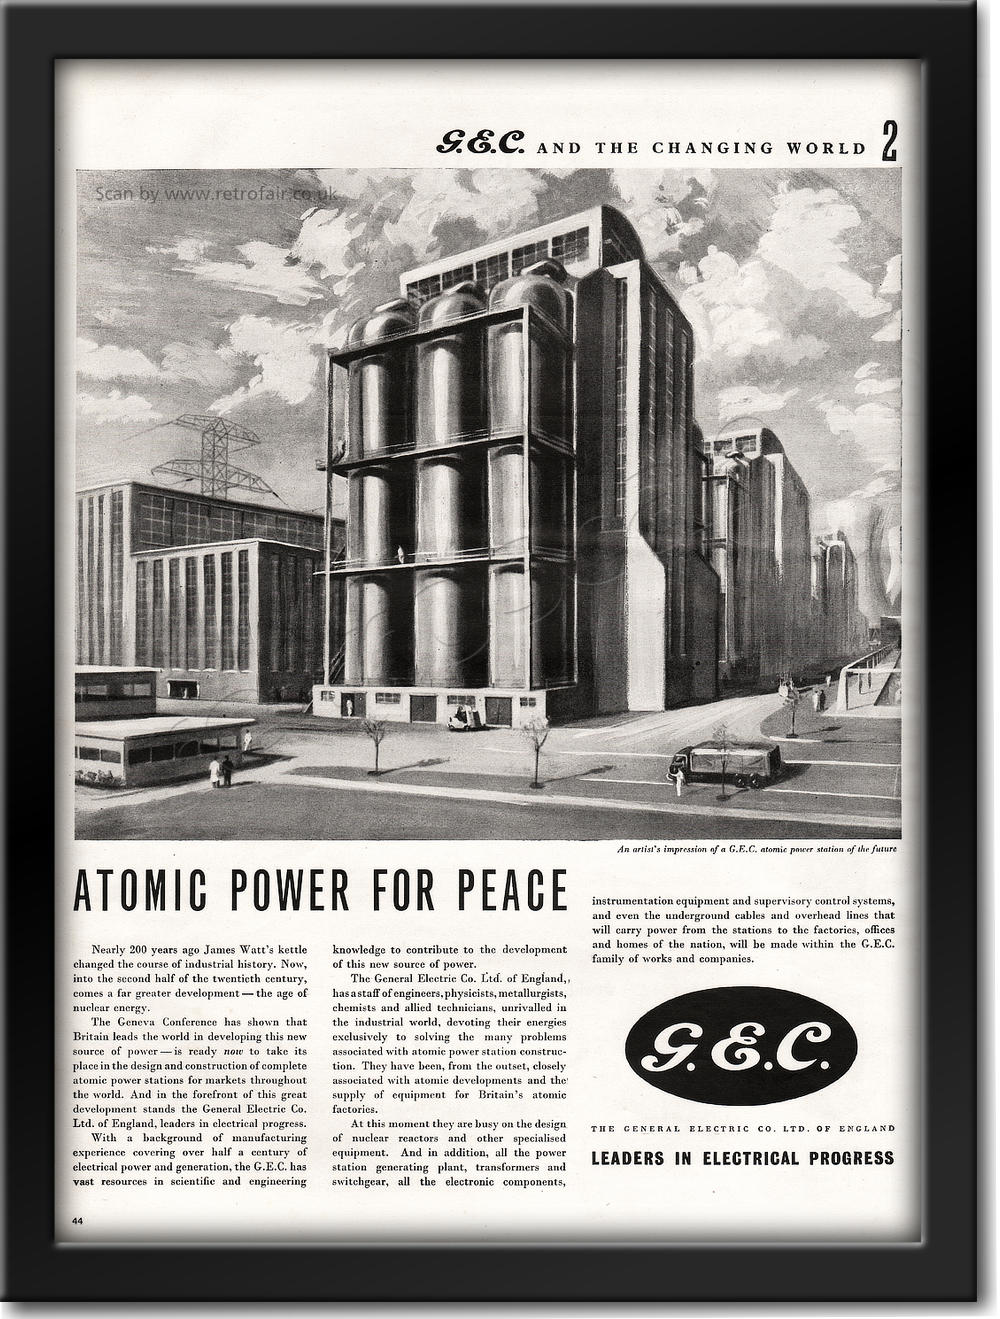 1955 General Electric Corporation (GEC) vintage ad